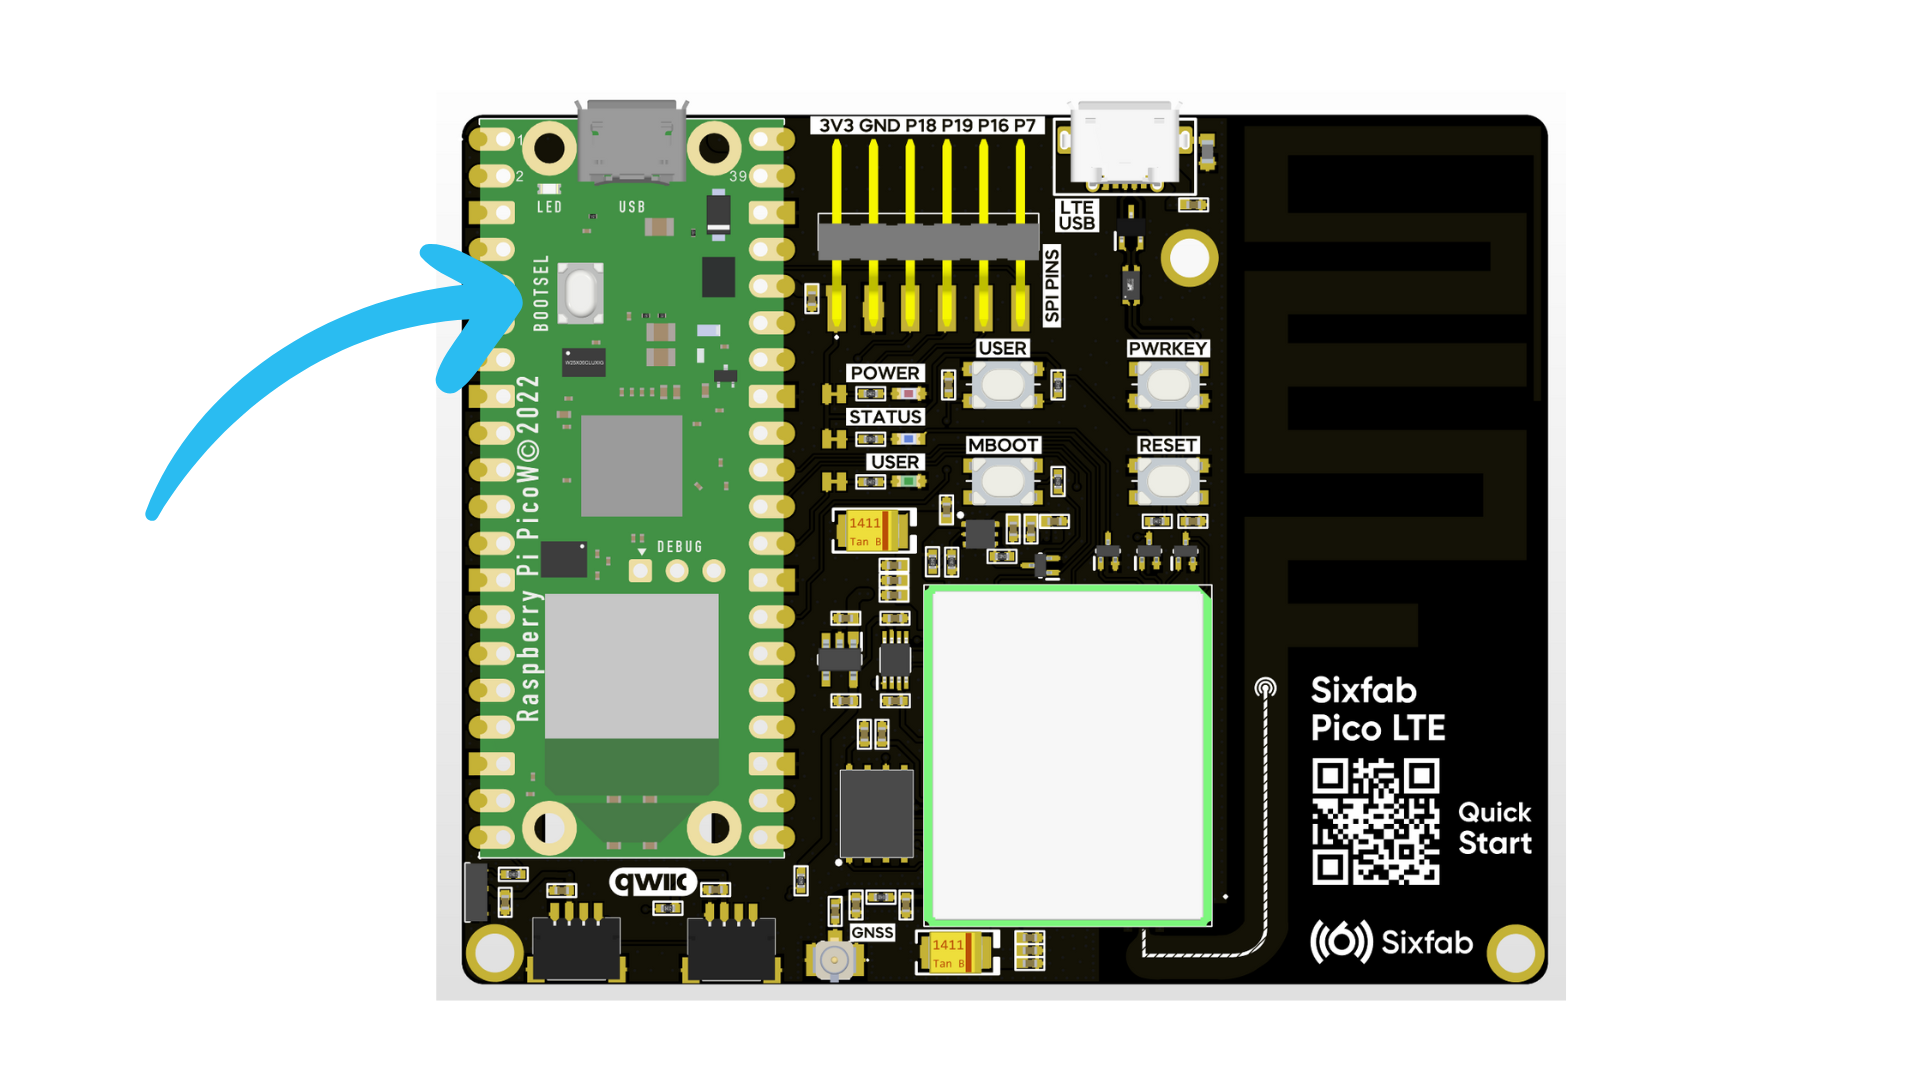 Sixfab Pico LTE SDK MicroPython - Bootsel Button